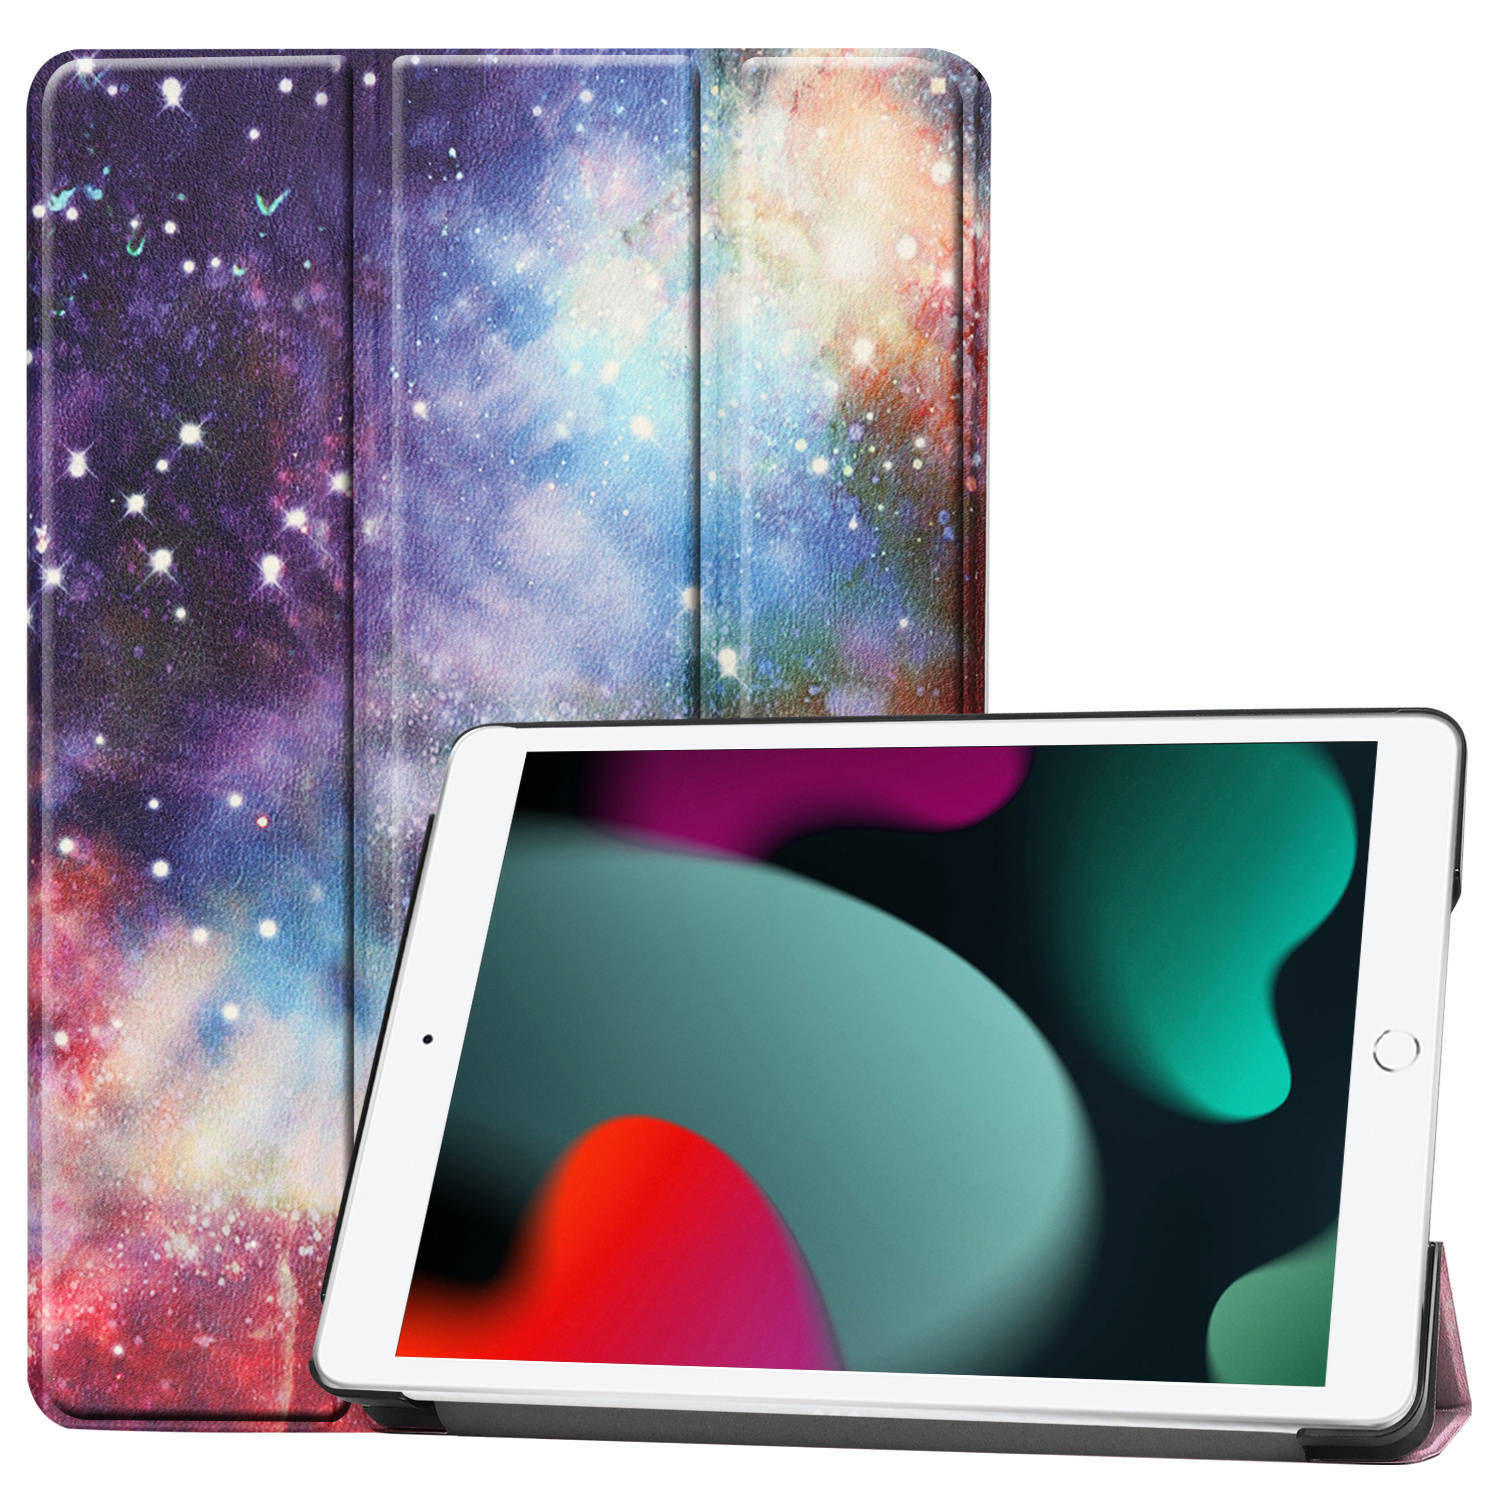 Basey iPad 10.2 2019 Hoes Book Case Hoesje - iPad 10.2 2019 Hoesje Hard Cover Case Hoes - Galaxy